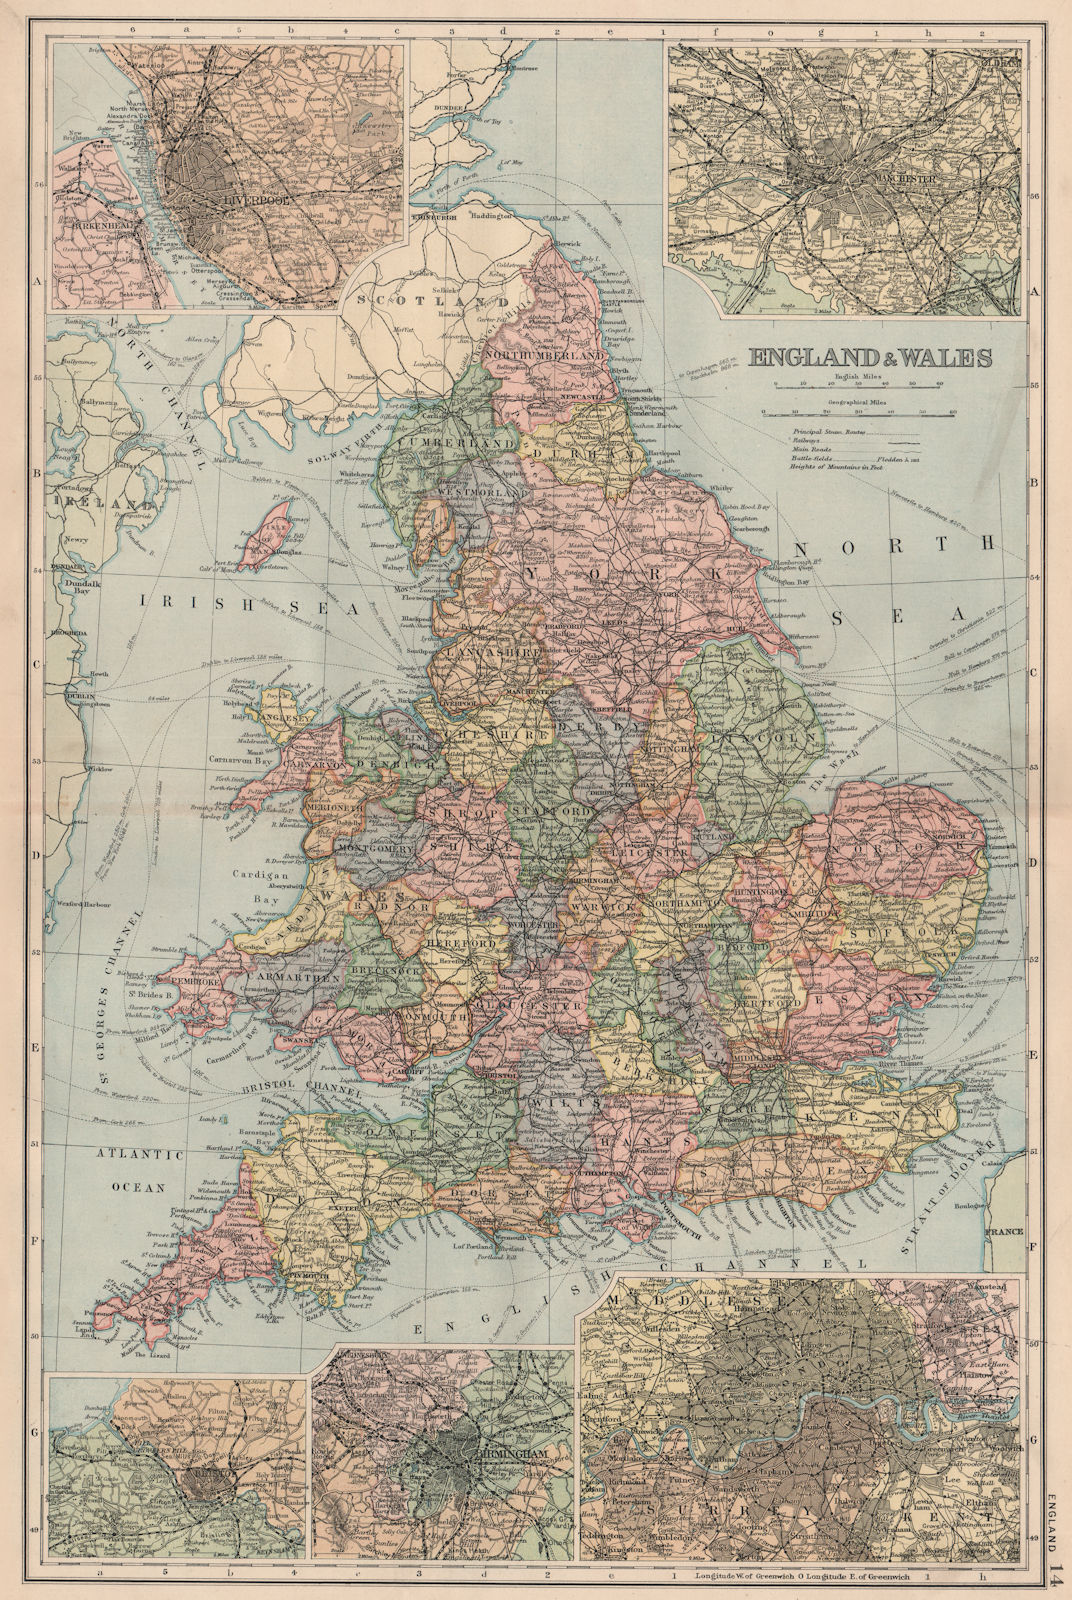 Associate Product ENGLAND & WALES. Liverpool Manchester Bristol Birmingham London. BACON 1893 map